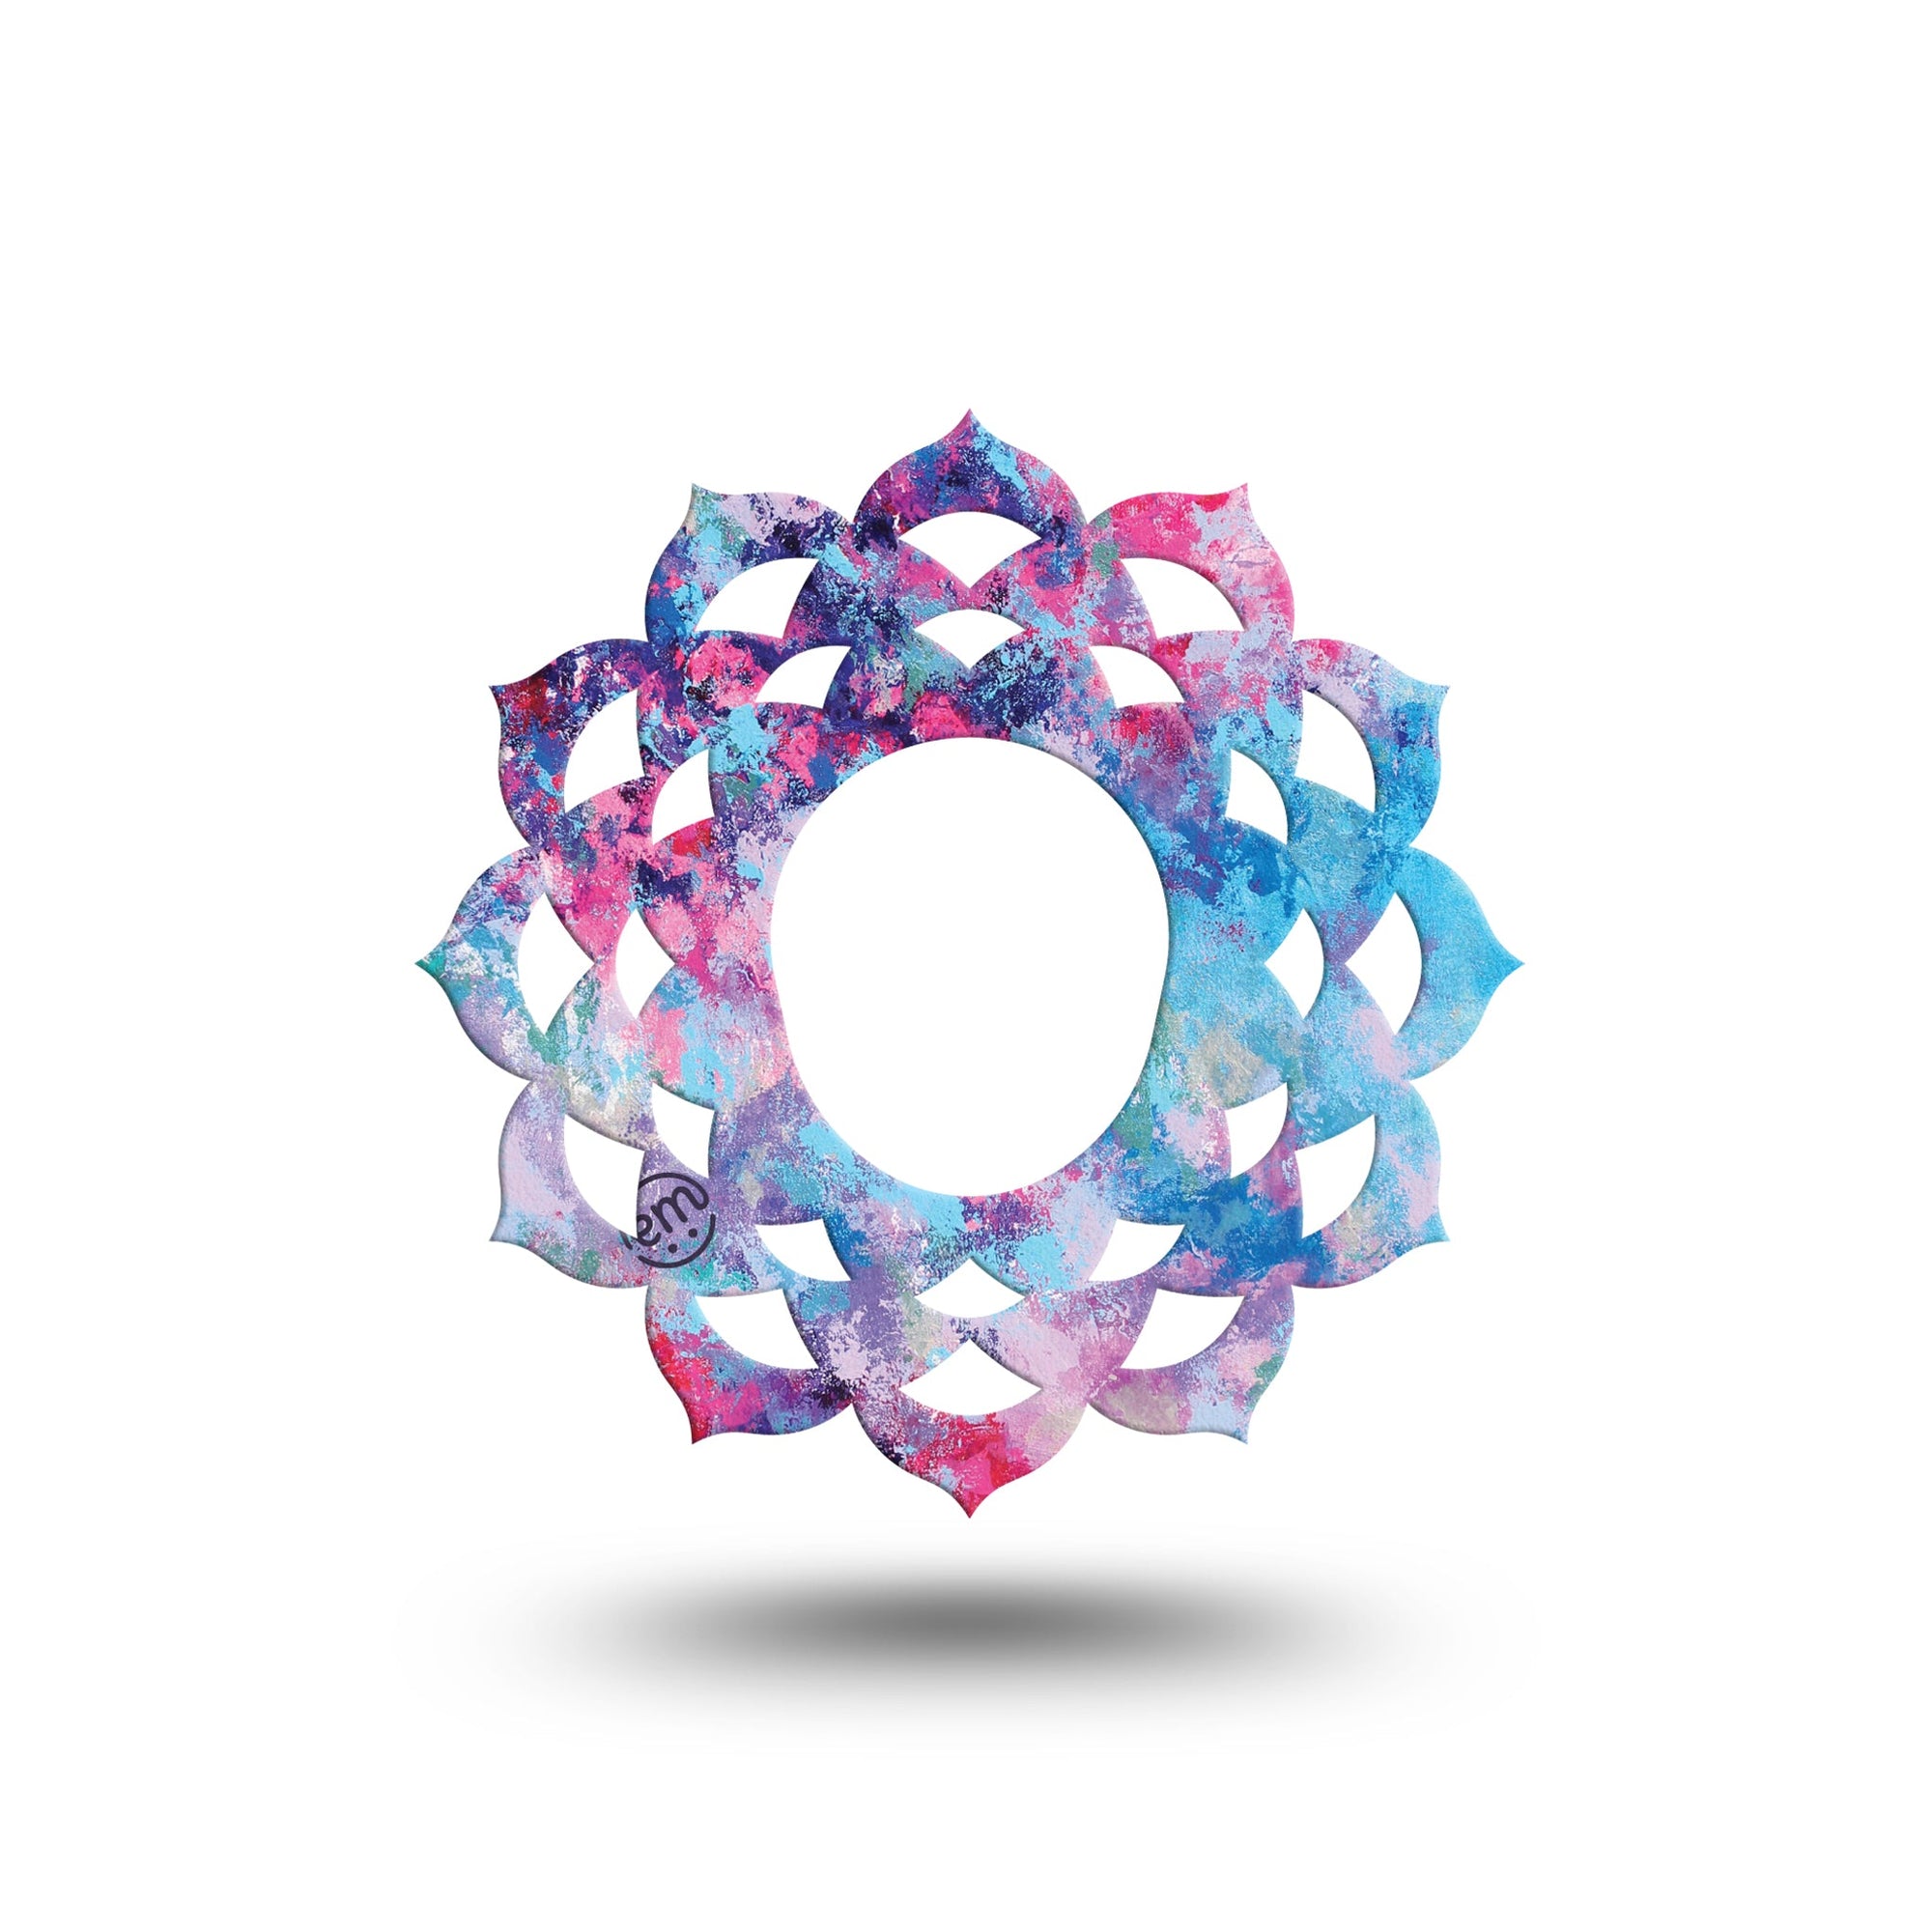 ExpressionMed Ascendant, The Rise Dexcom G7 Mandala Tape, Single, Pink blue purple intricate mandala fixing ring CGM design 